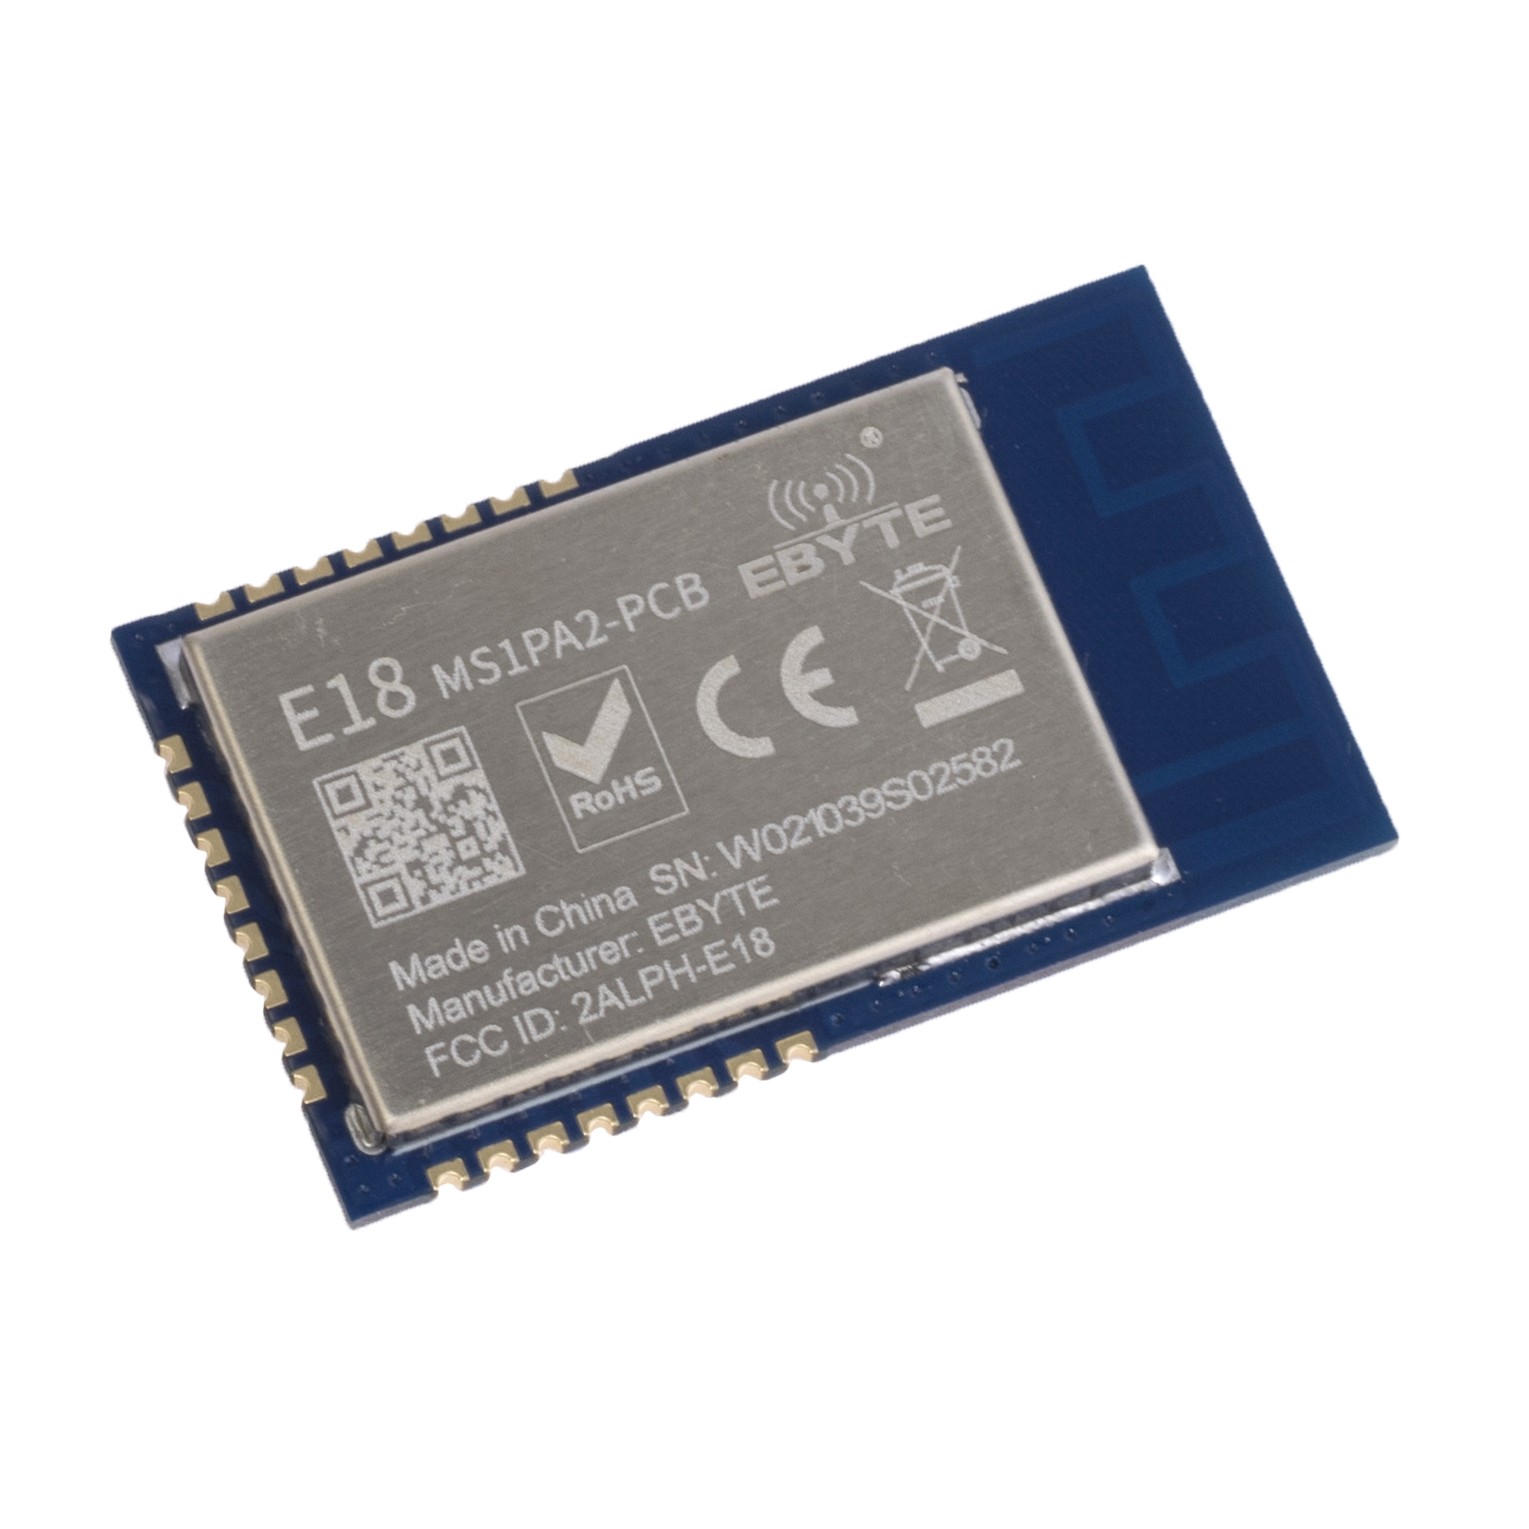 E18-MS1PA2-PCB (Ebyte) Zigbee module on chip CC2530 2,4GHz SMD